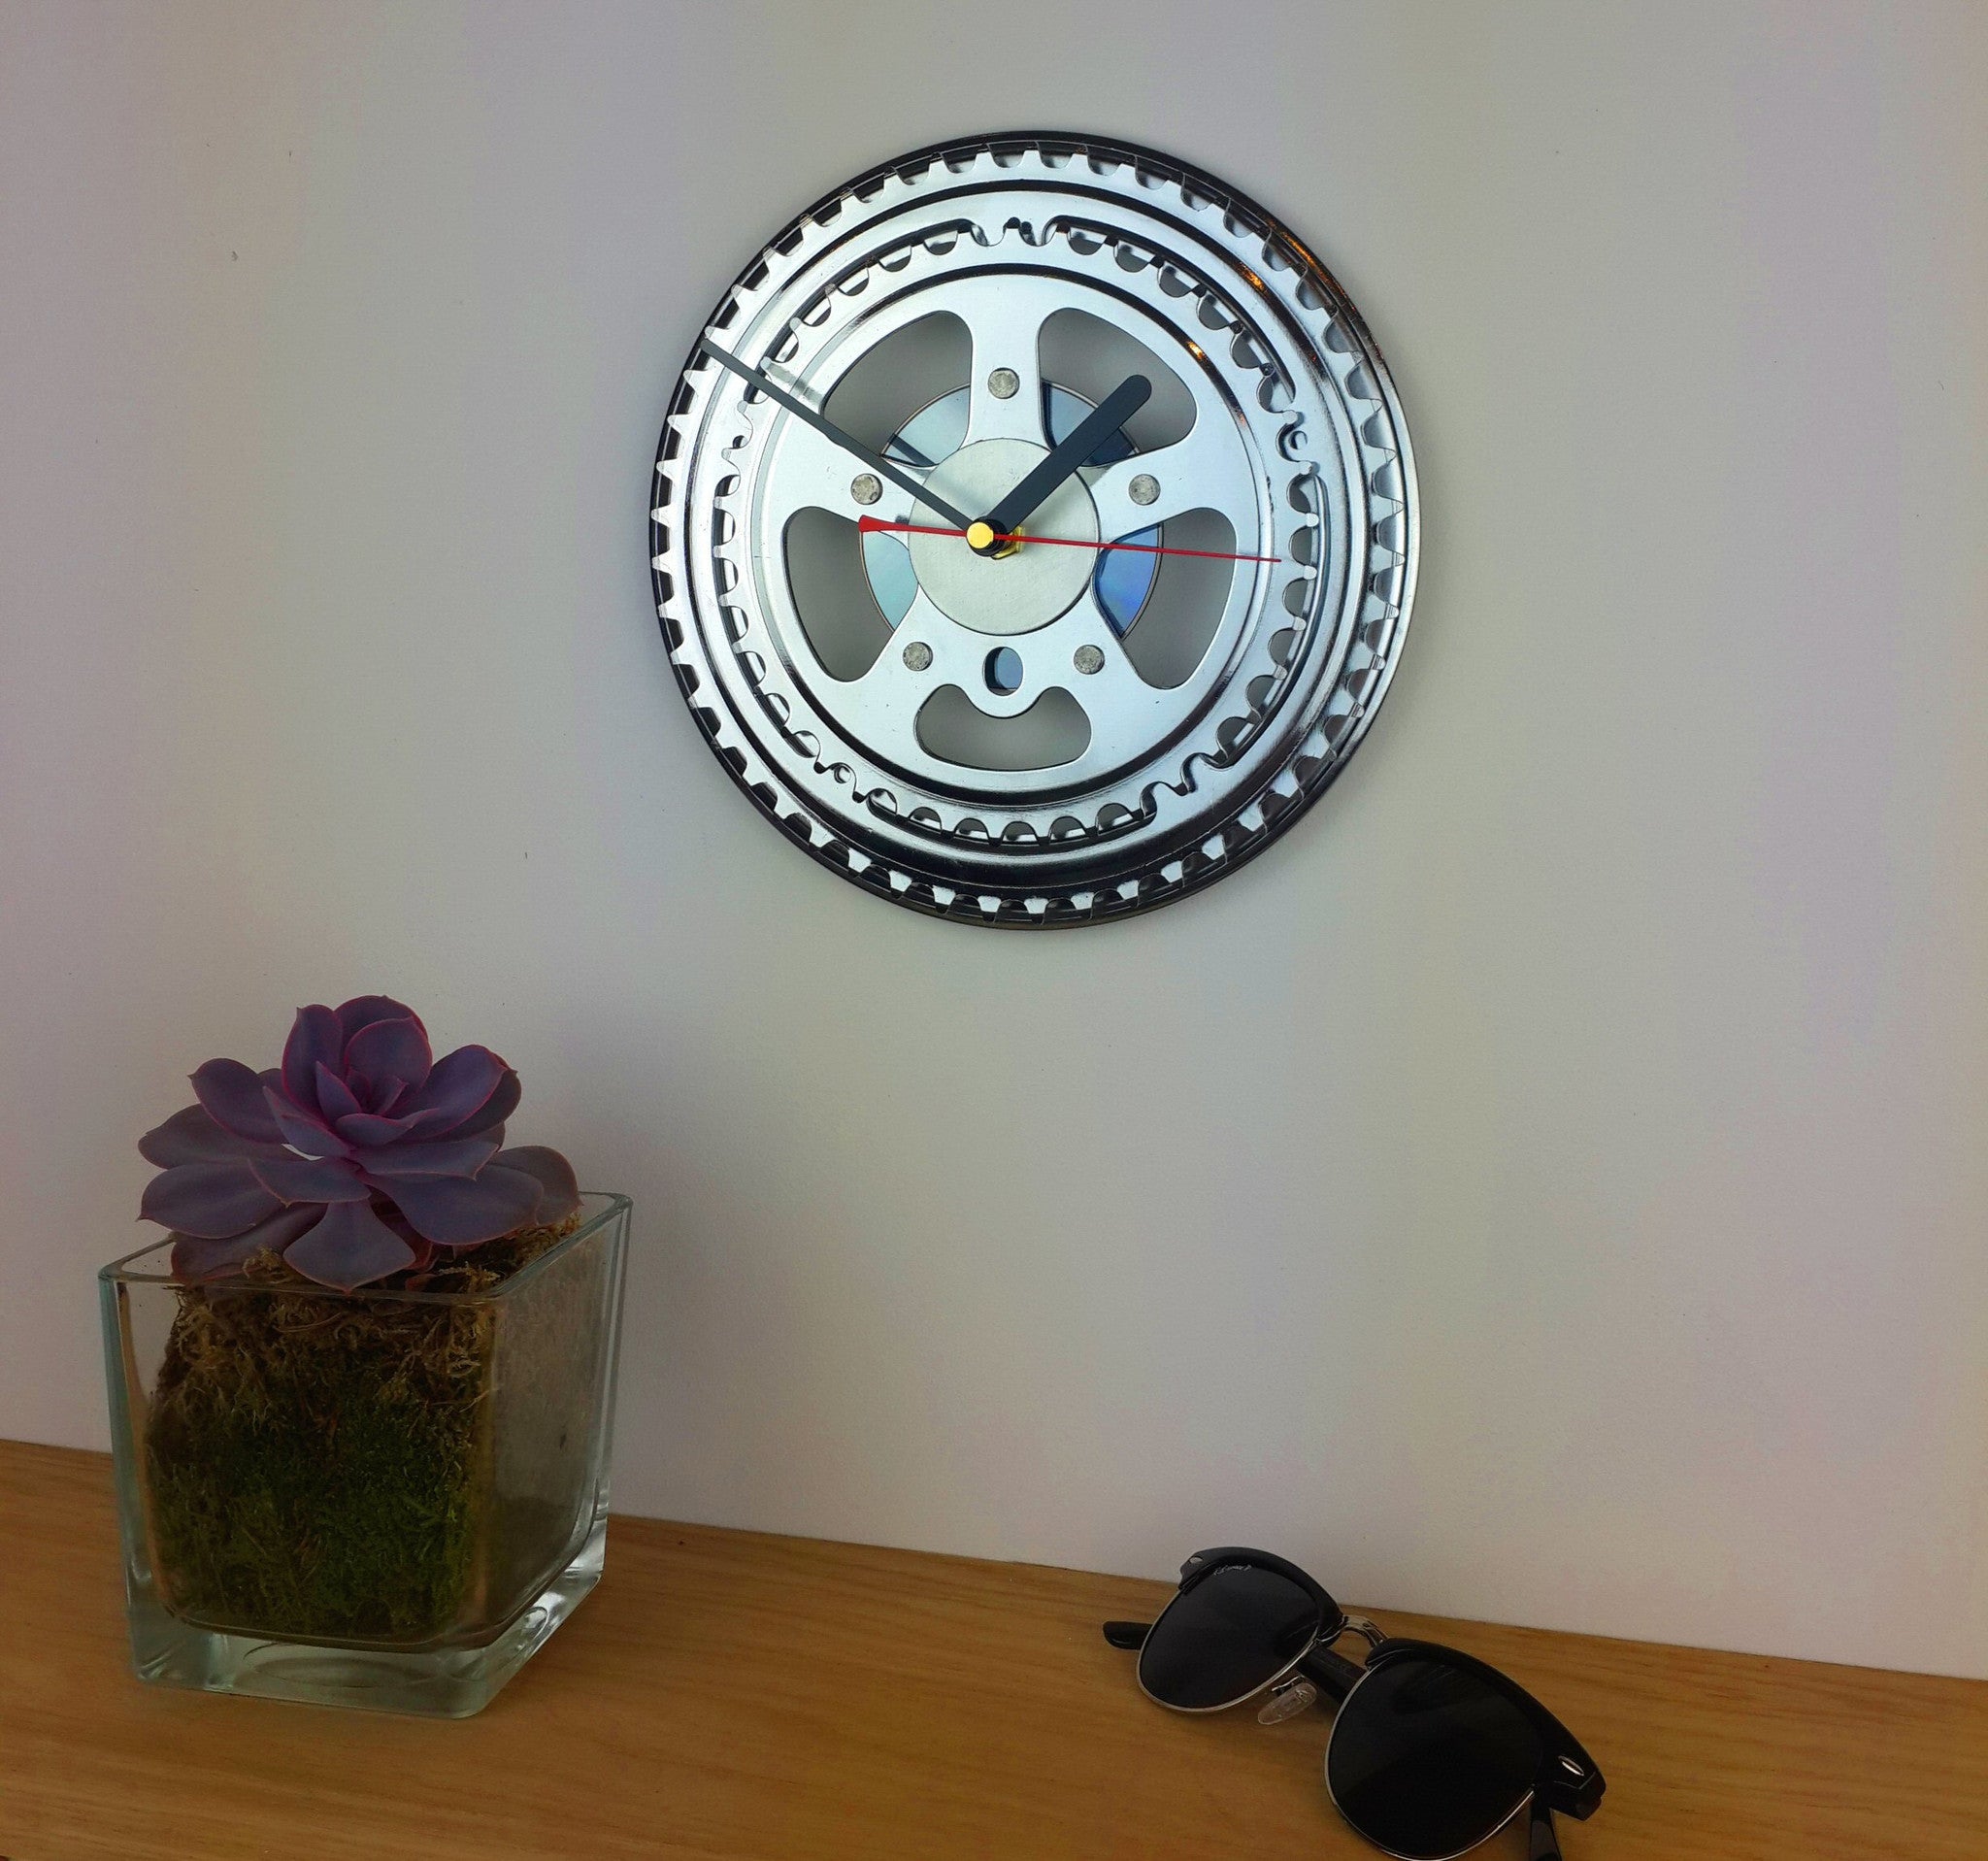 Silver Chainwheel Bicycle Clock